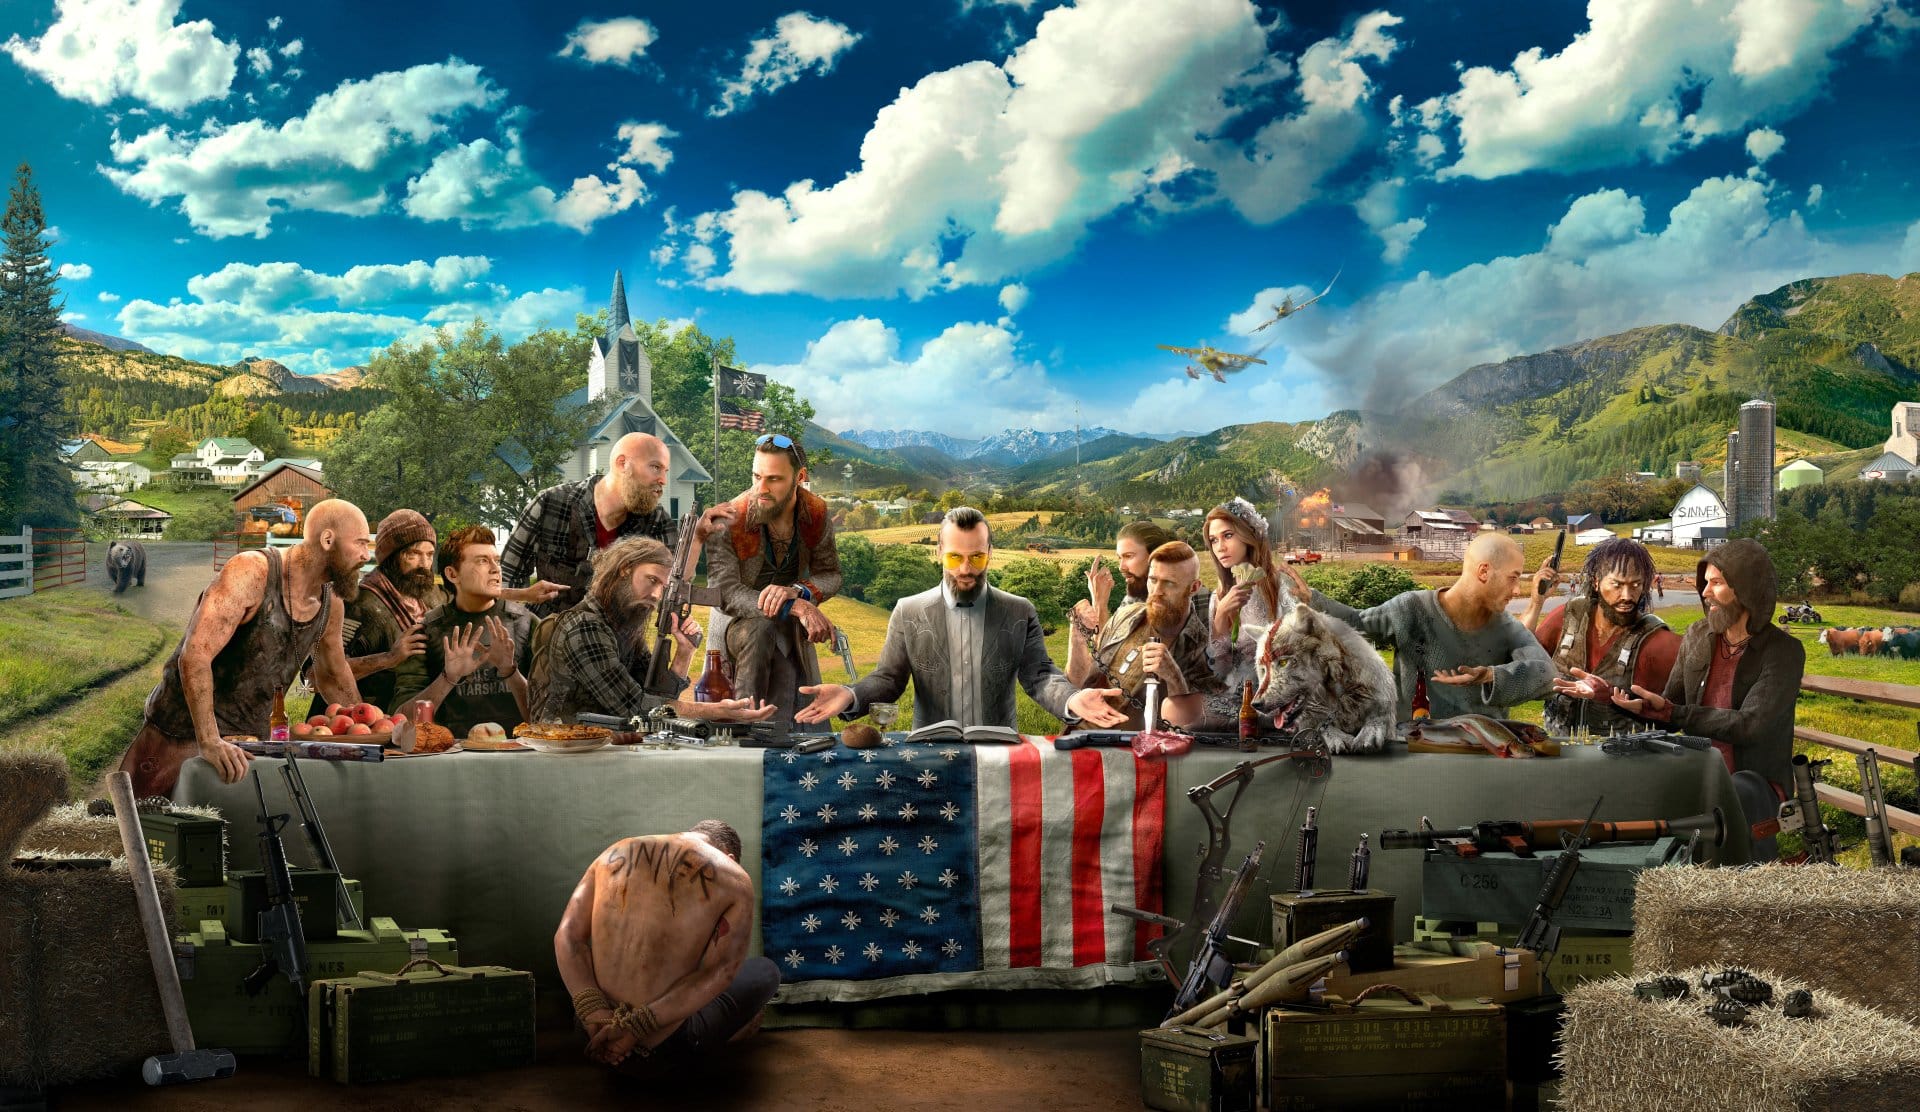 Far Cry 5 artwork